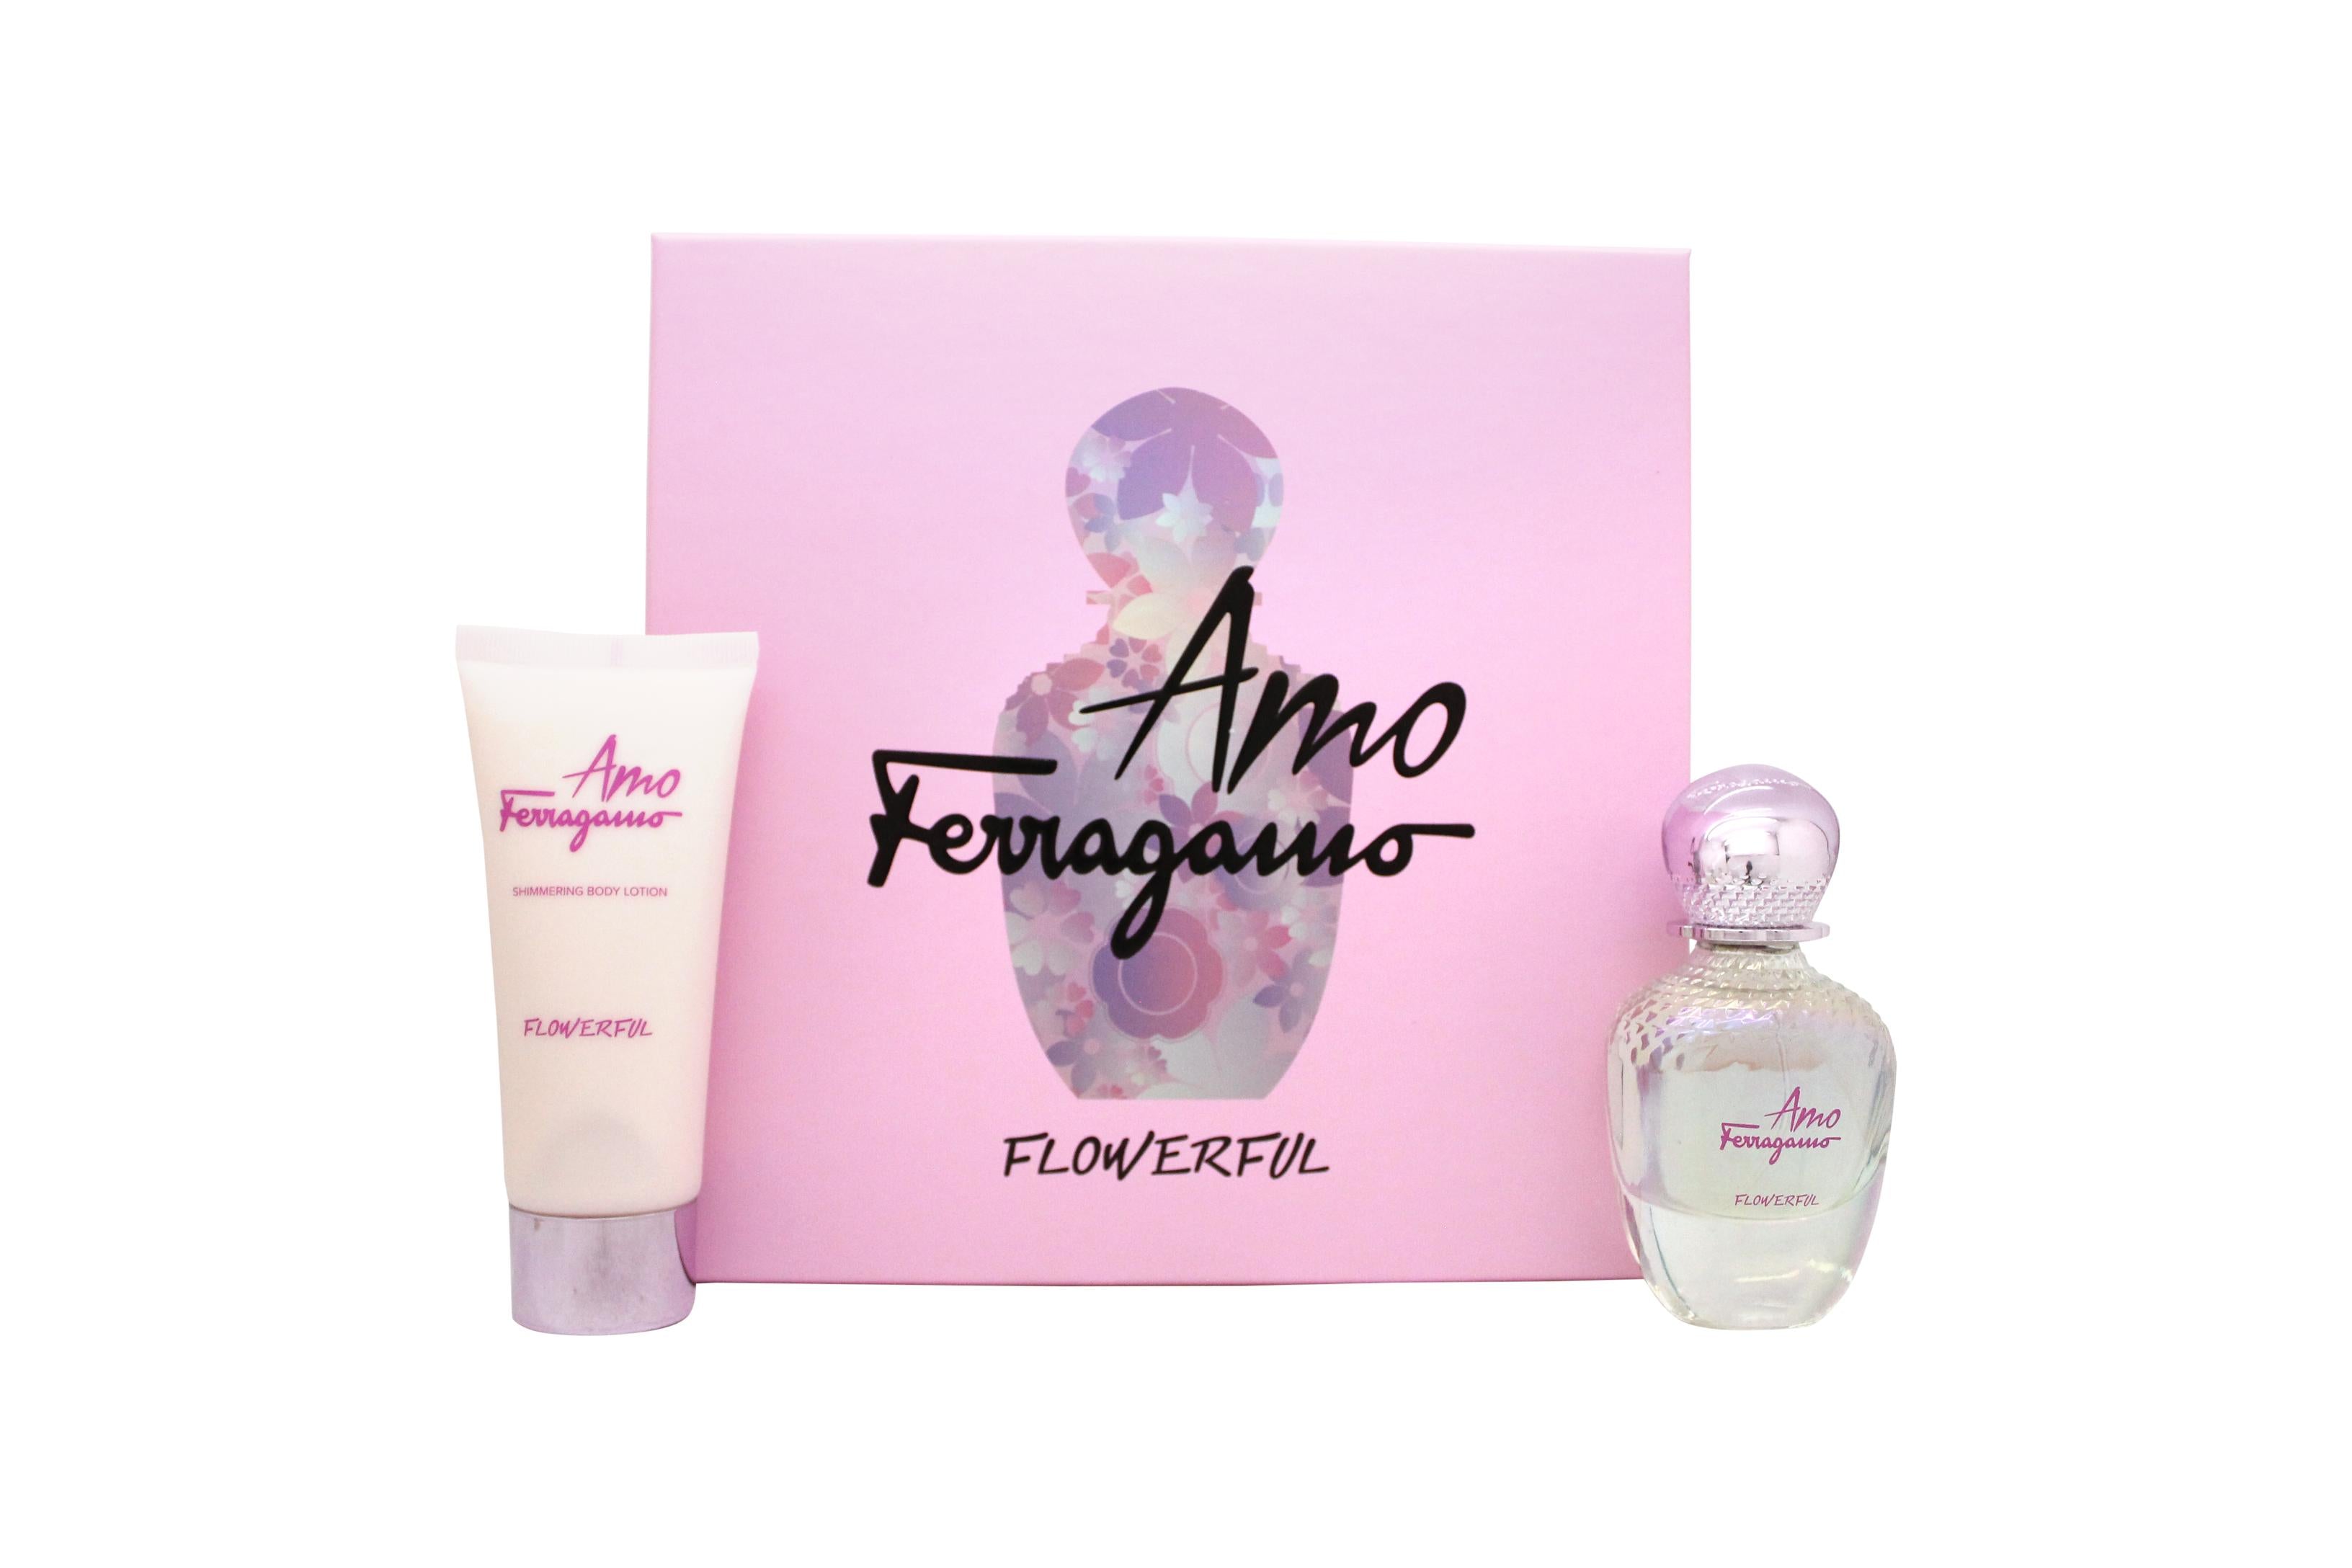 View Salvatore Ferragamo Amo Ferragamo Flowerful Gift Set 50ml EDT Spray 100ml Body Lotion information